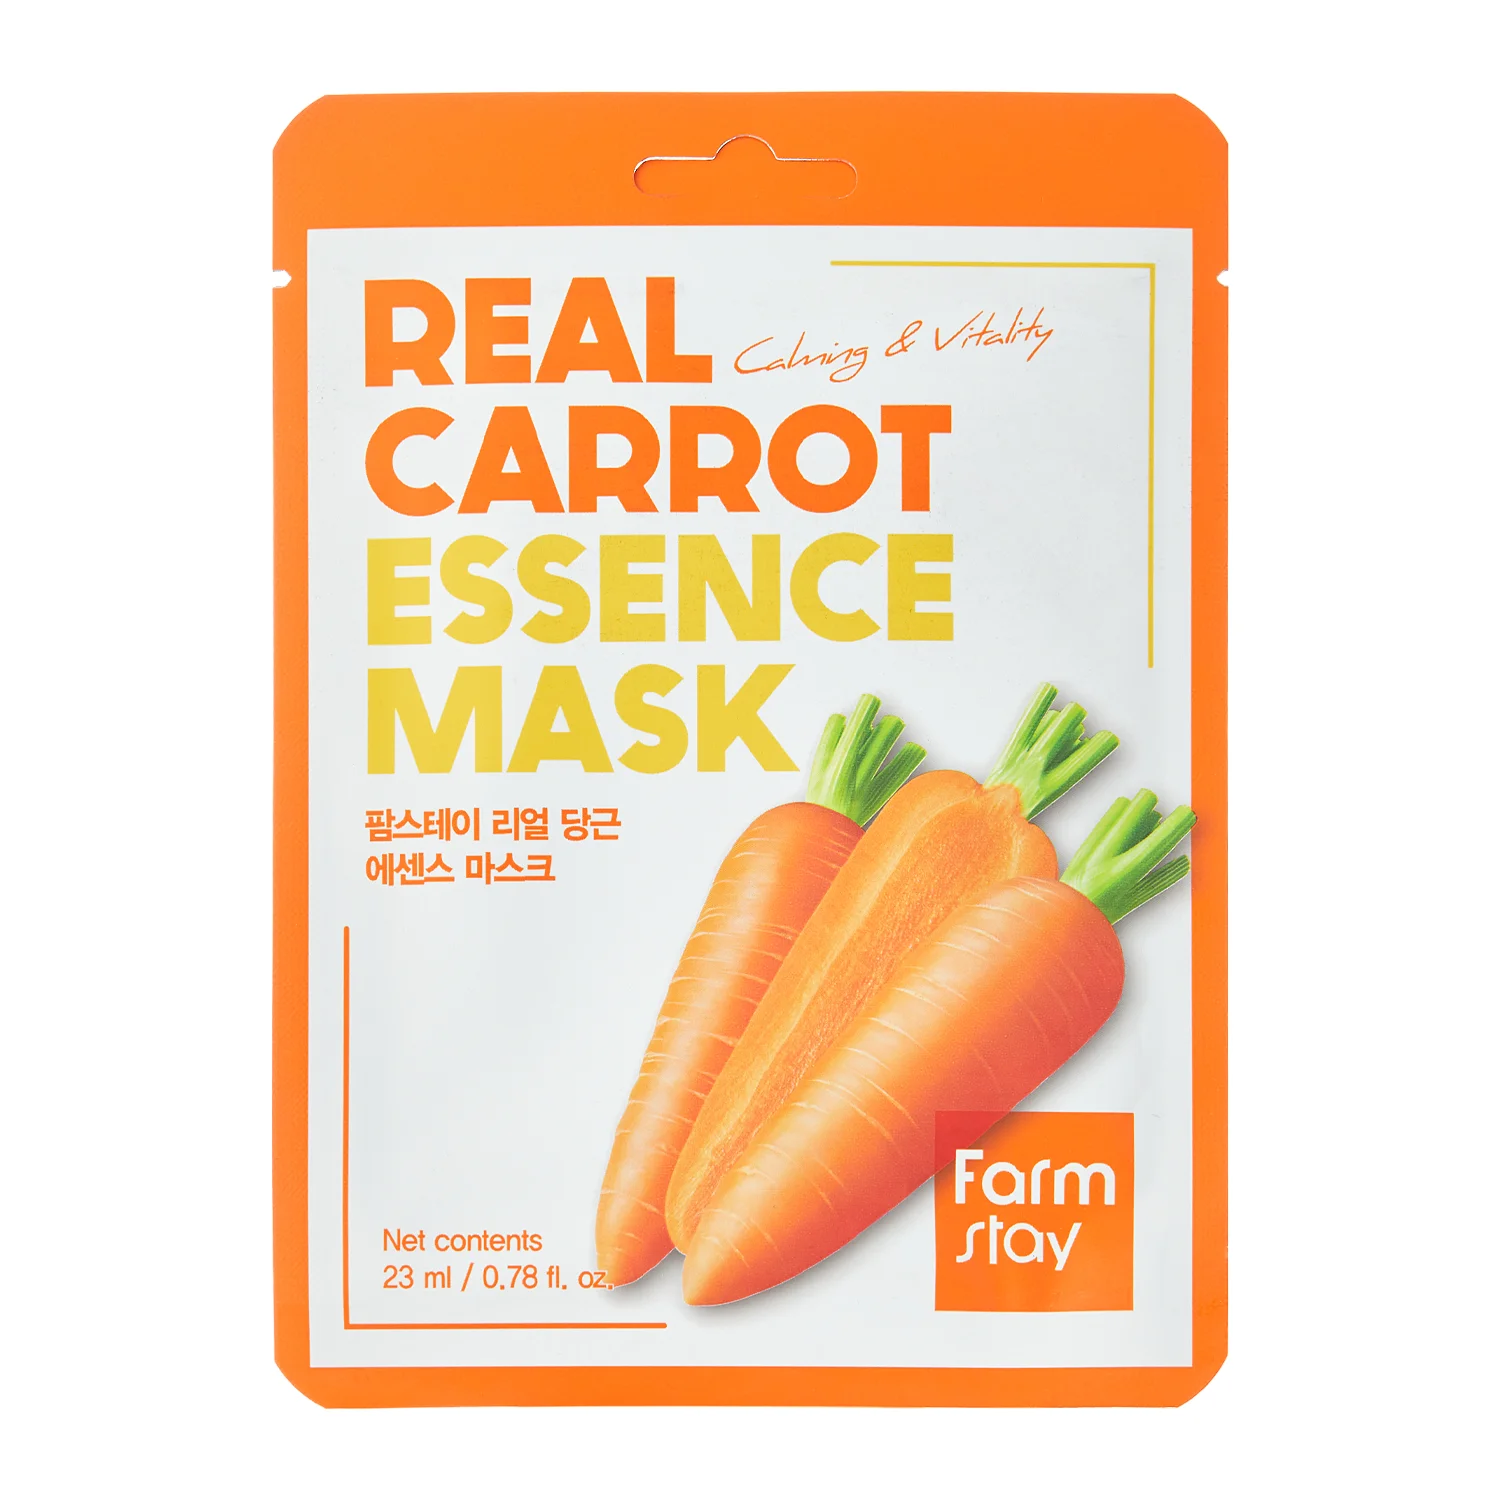 Farmstay - Real Carrot Essence Mask - Освітлювальна тканинна маска з екстрактом моркви - 23ml/1шт.